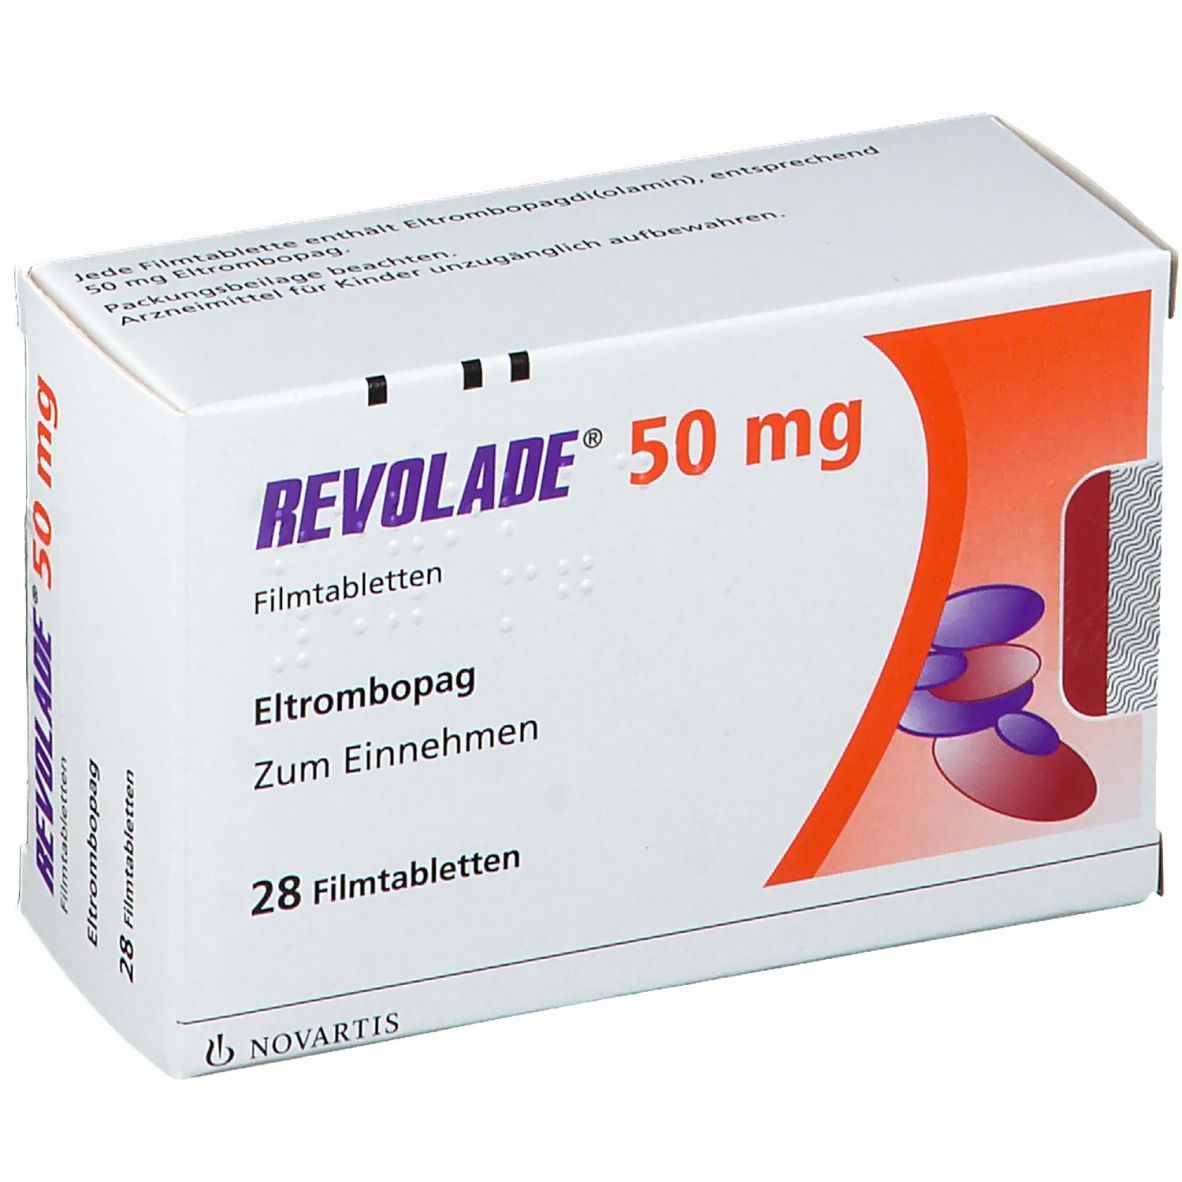 Revolade® 50 mg